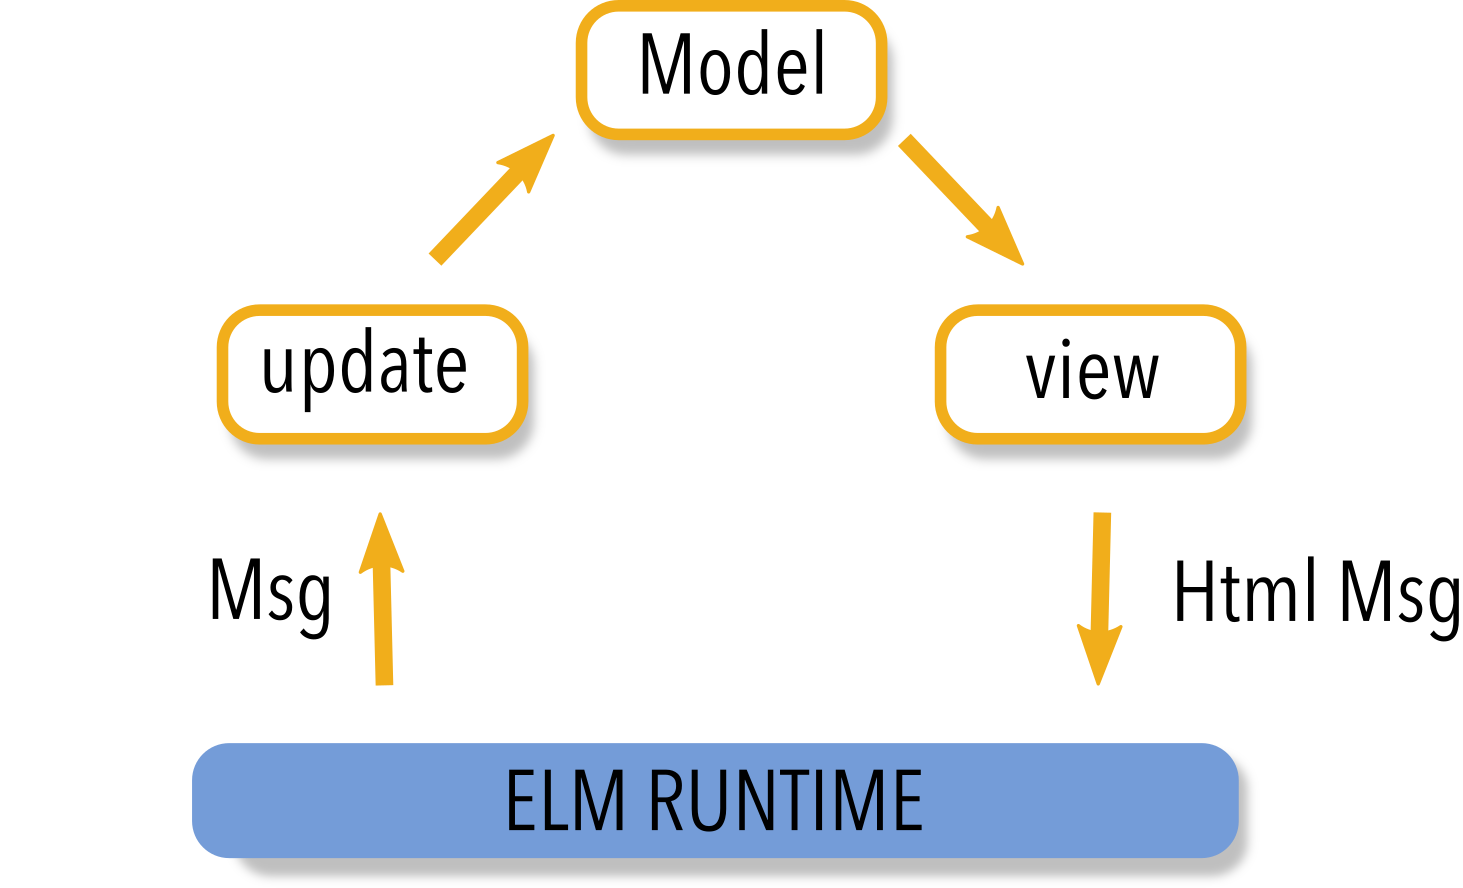 The Elm Architecture